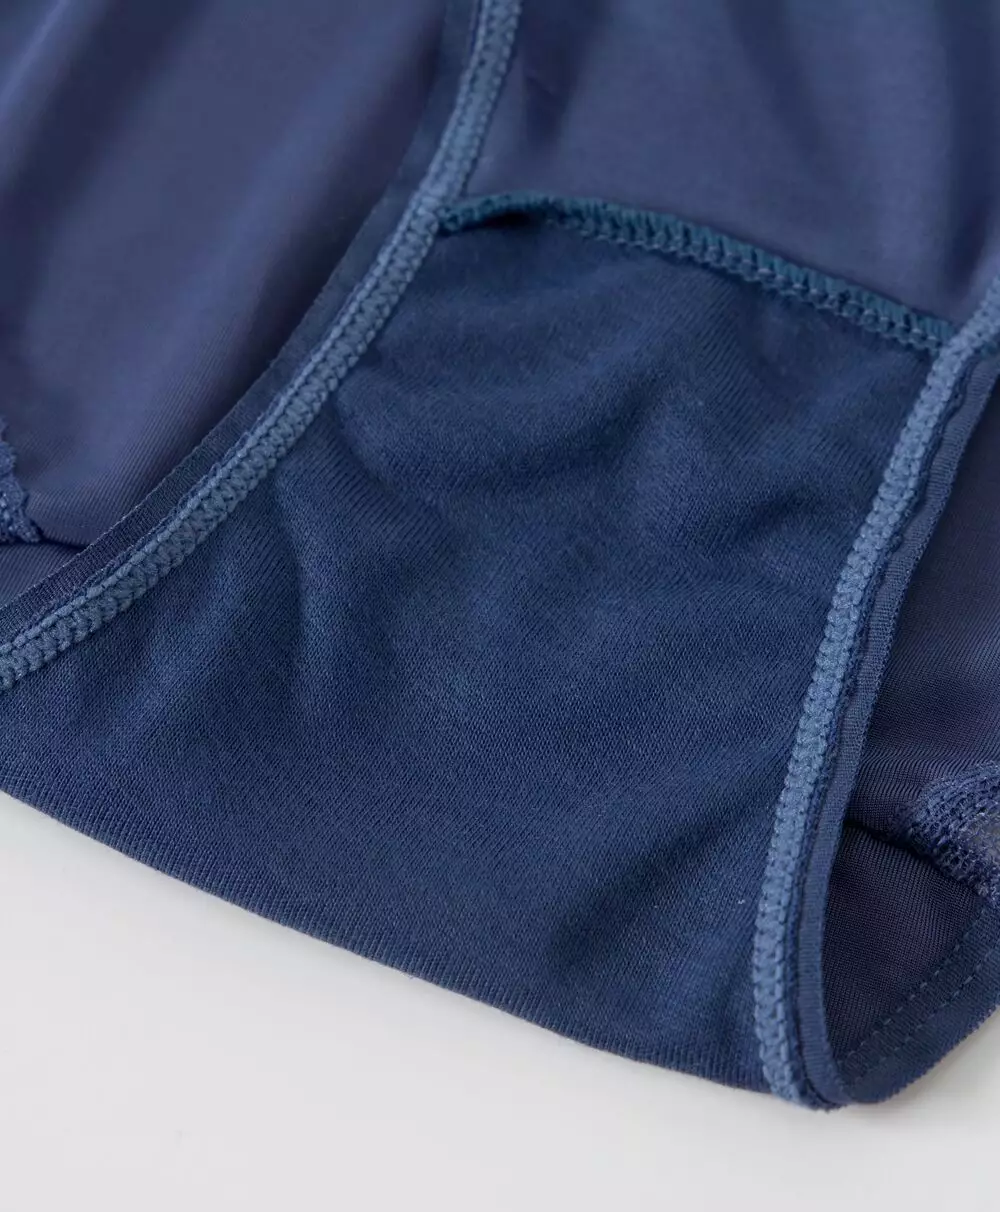 Jual Young Curves Panty Pack (Celana Dalam) Young Curves Microfiber ...